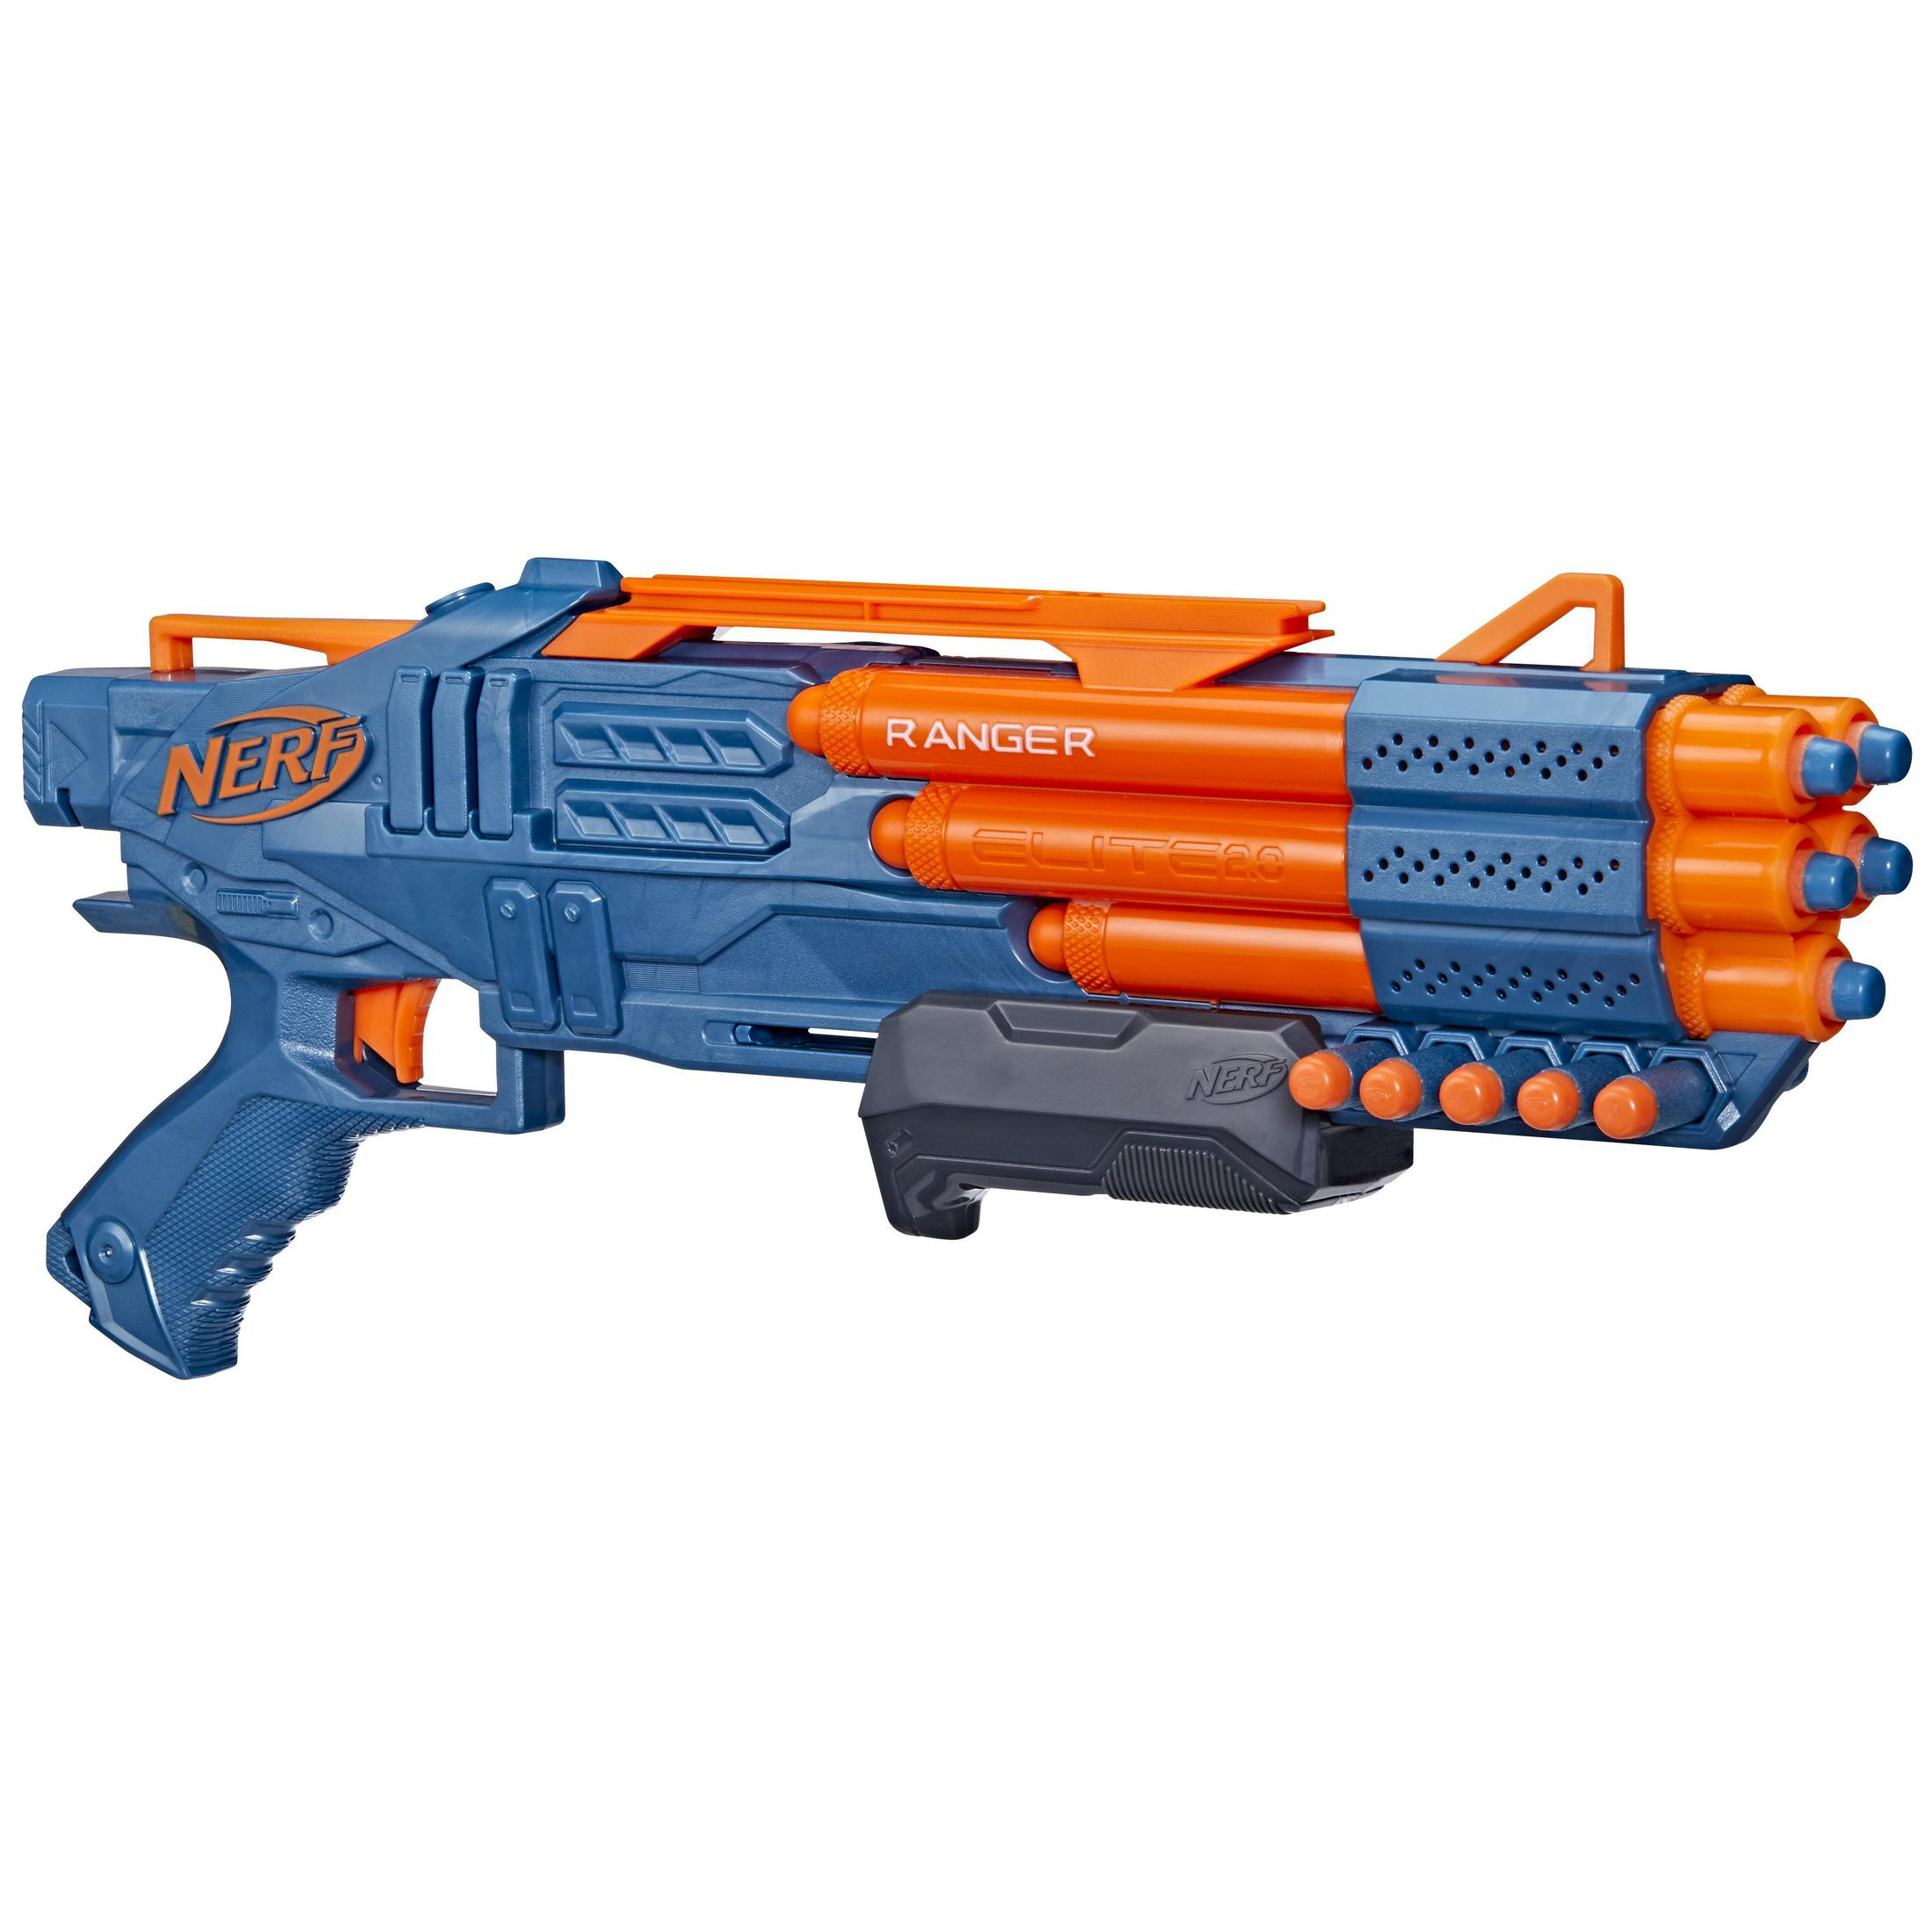 NERF Nerf ELITE 2.0 Ranger Spielzeugwaffe Keine 5 Angabe PD